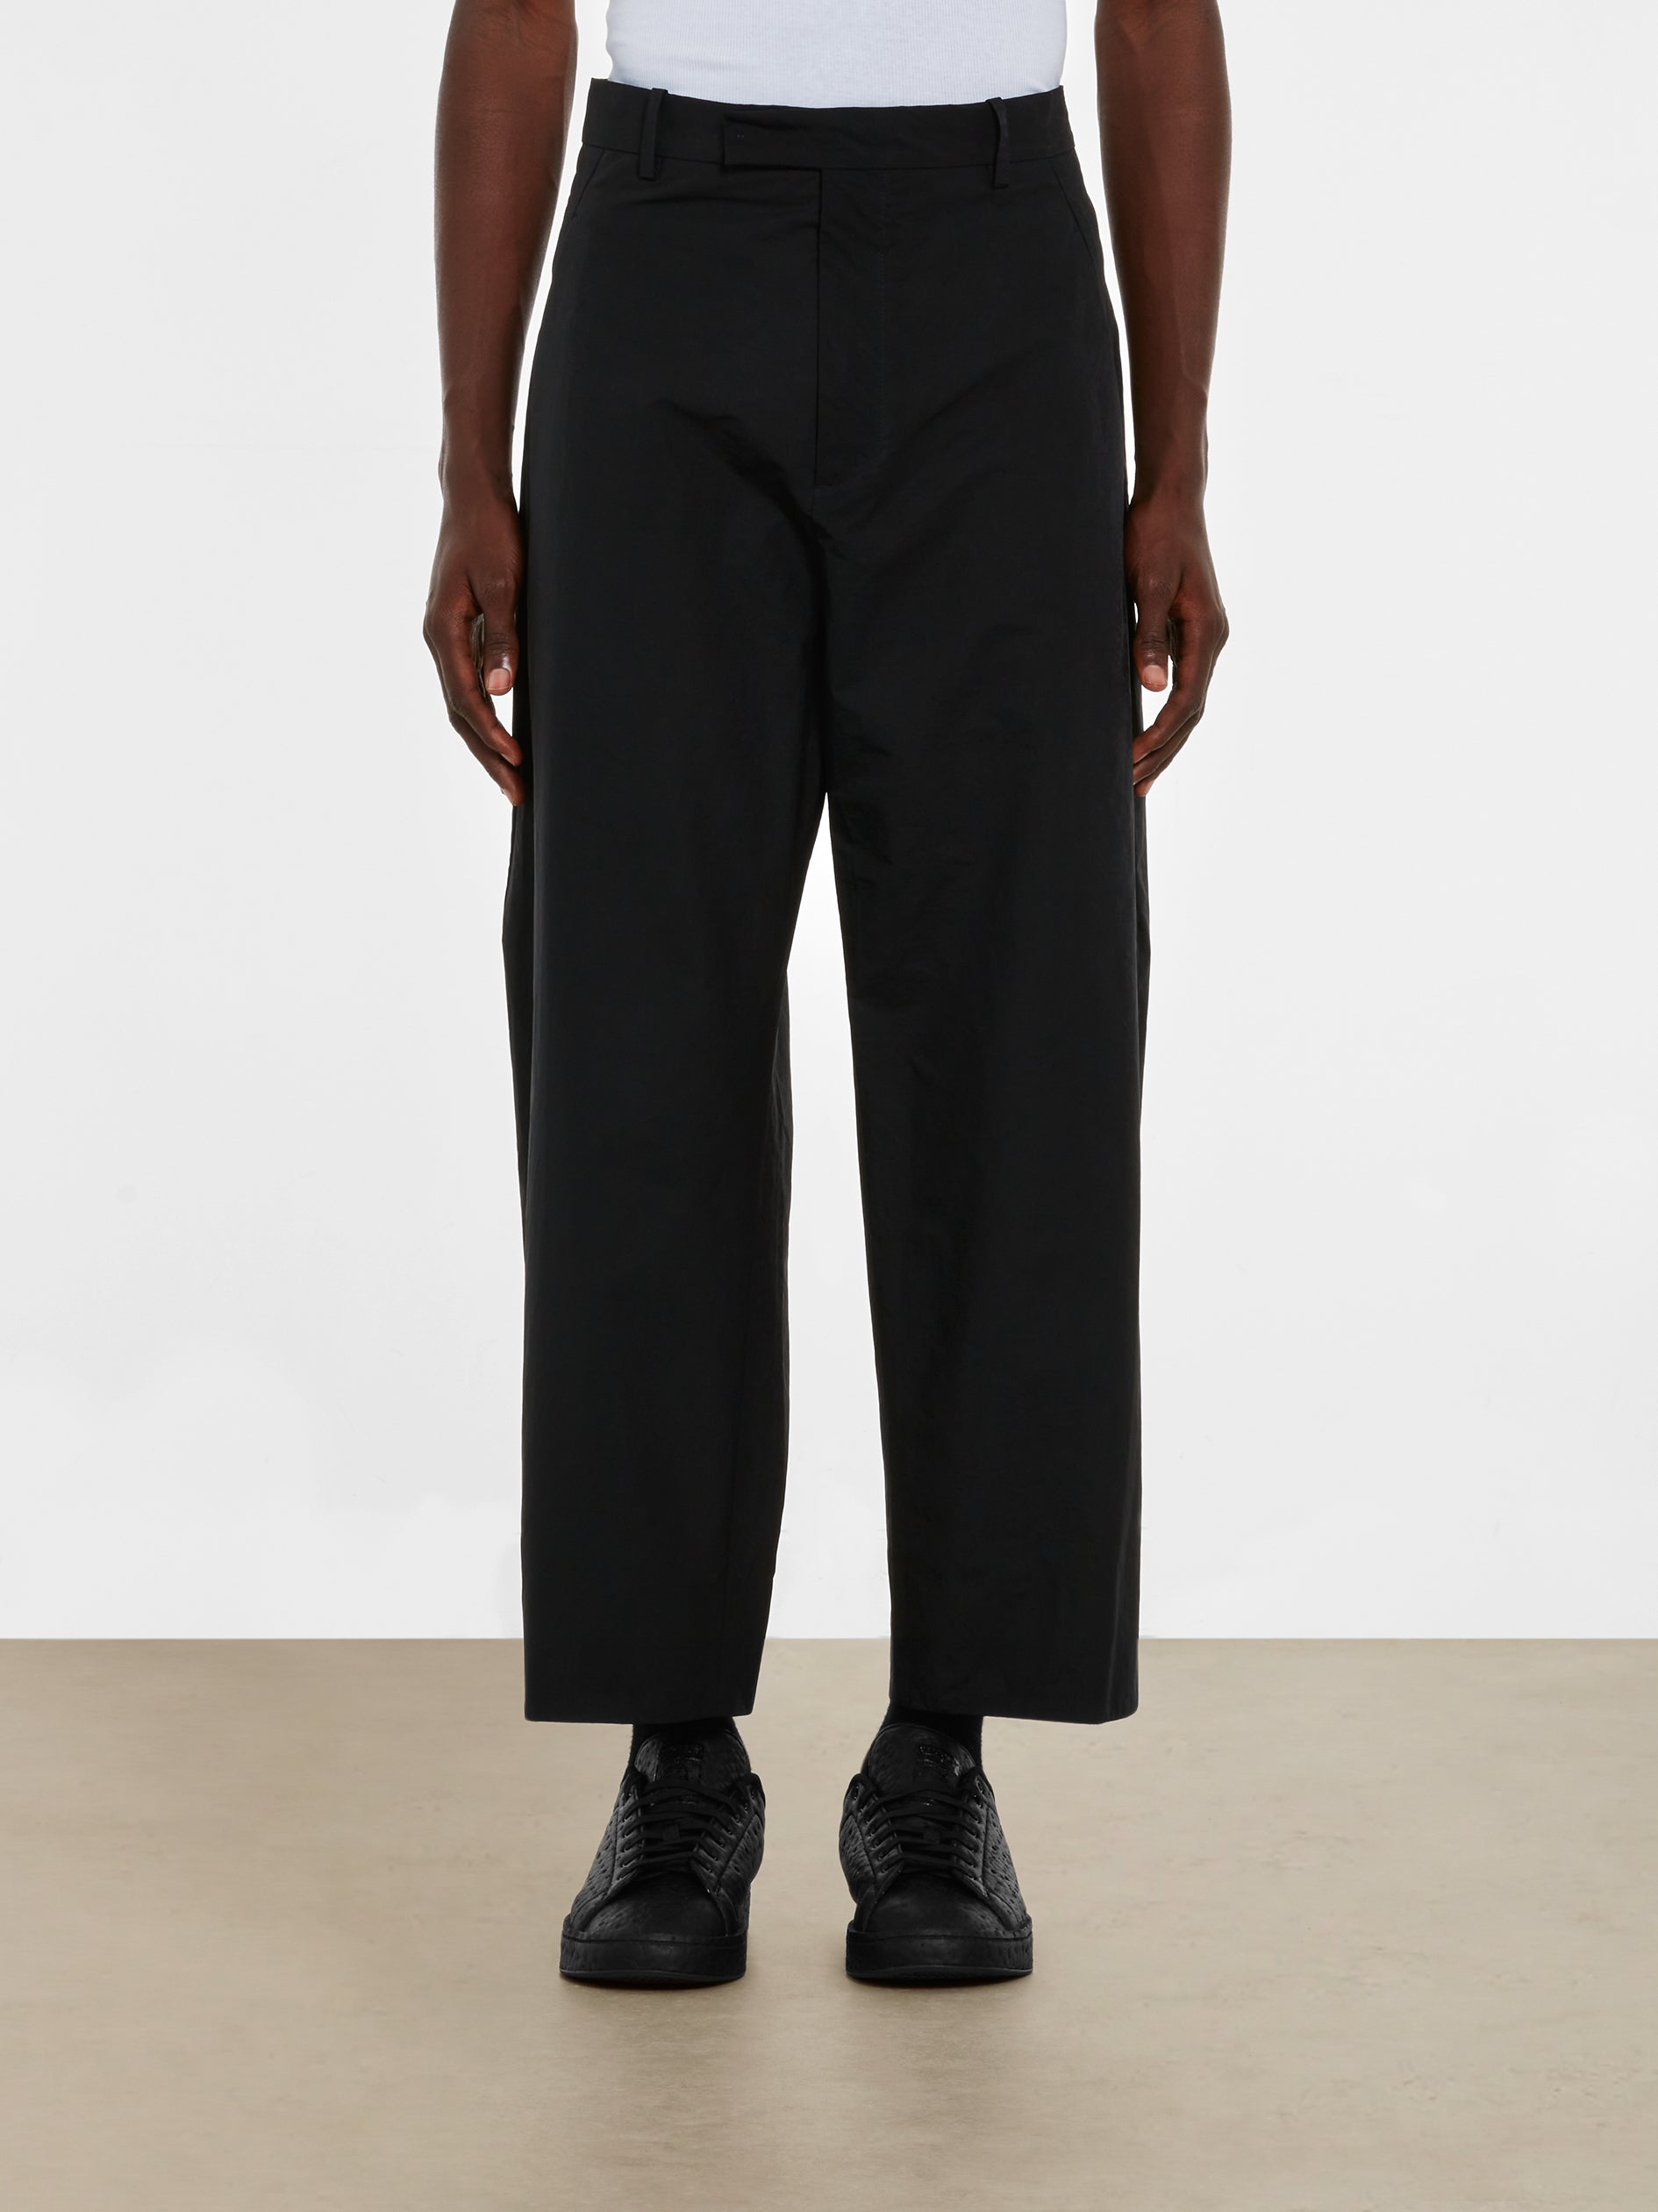 Craig Green - Men’s Uniform Wide Leg Trouser - (Black) view 2